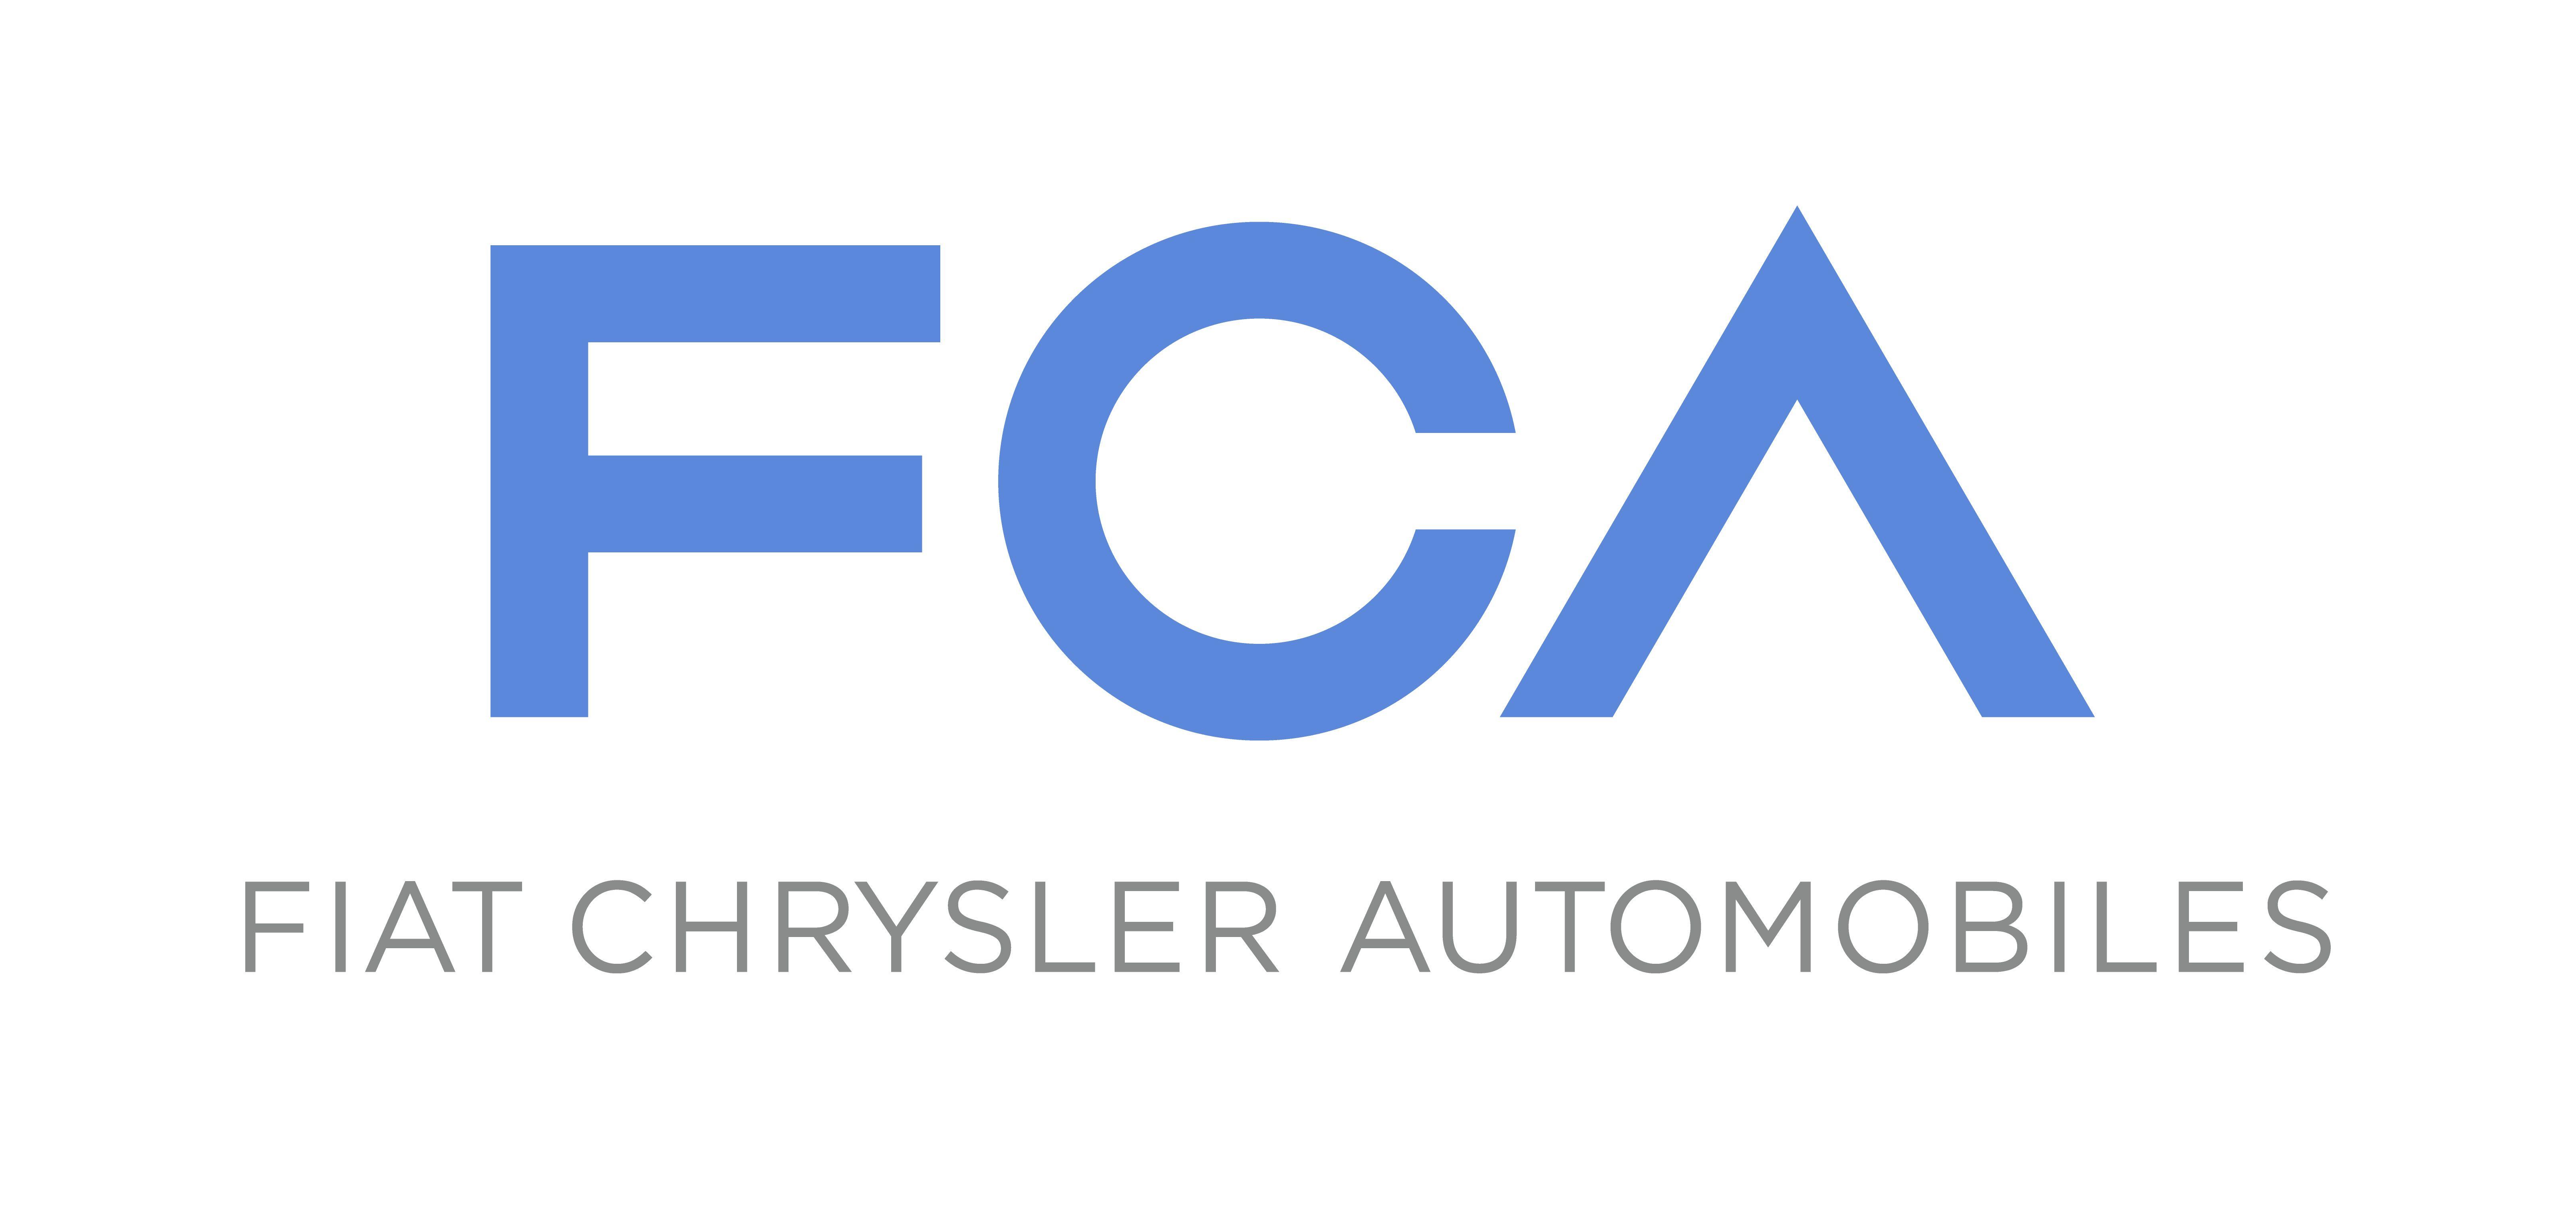 Waymo Logo - Corporations Working On Autonomous Vehicles